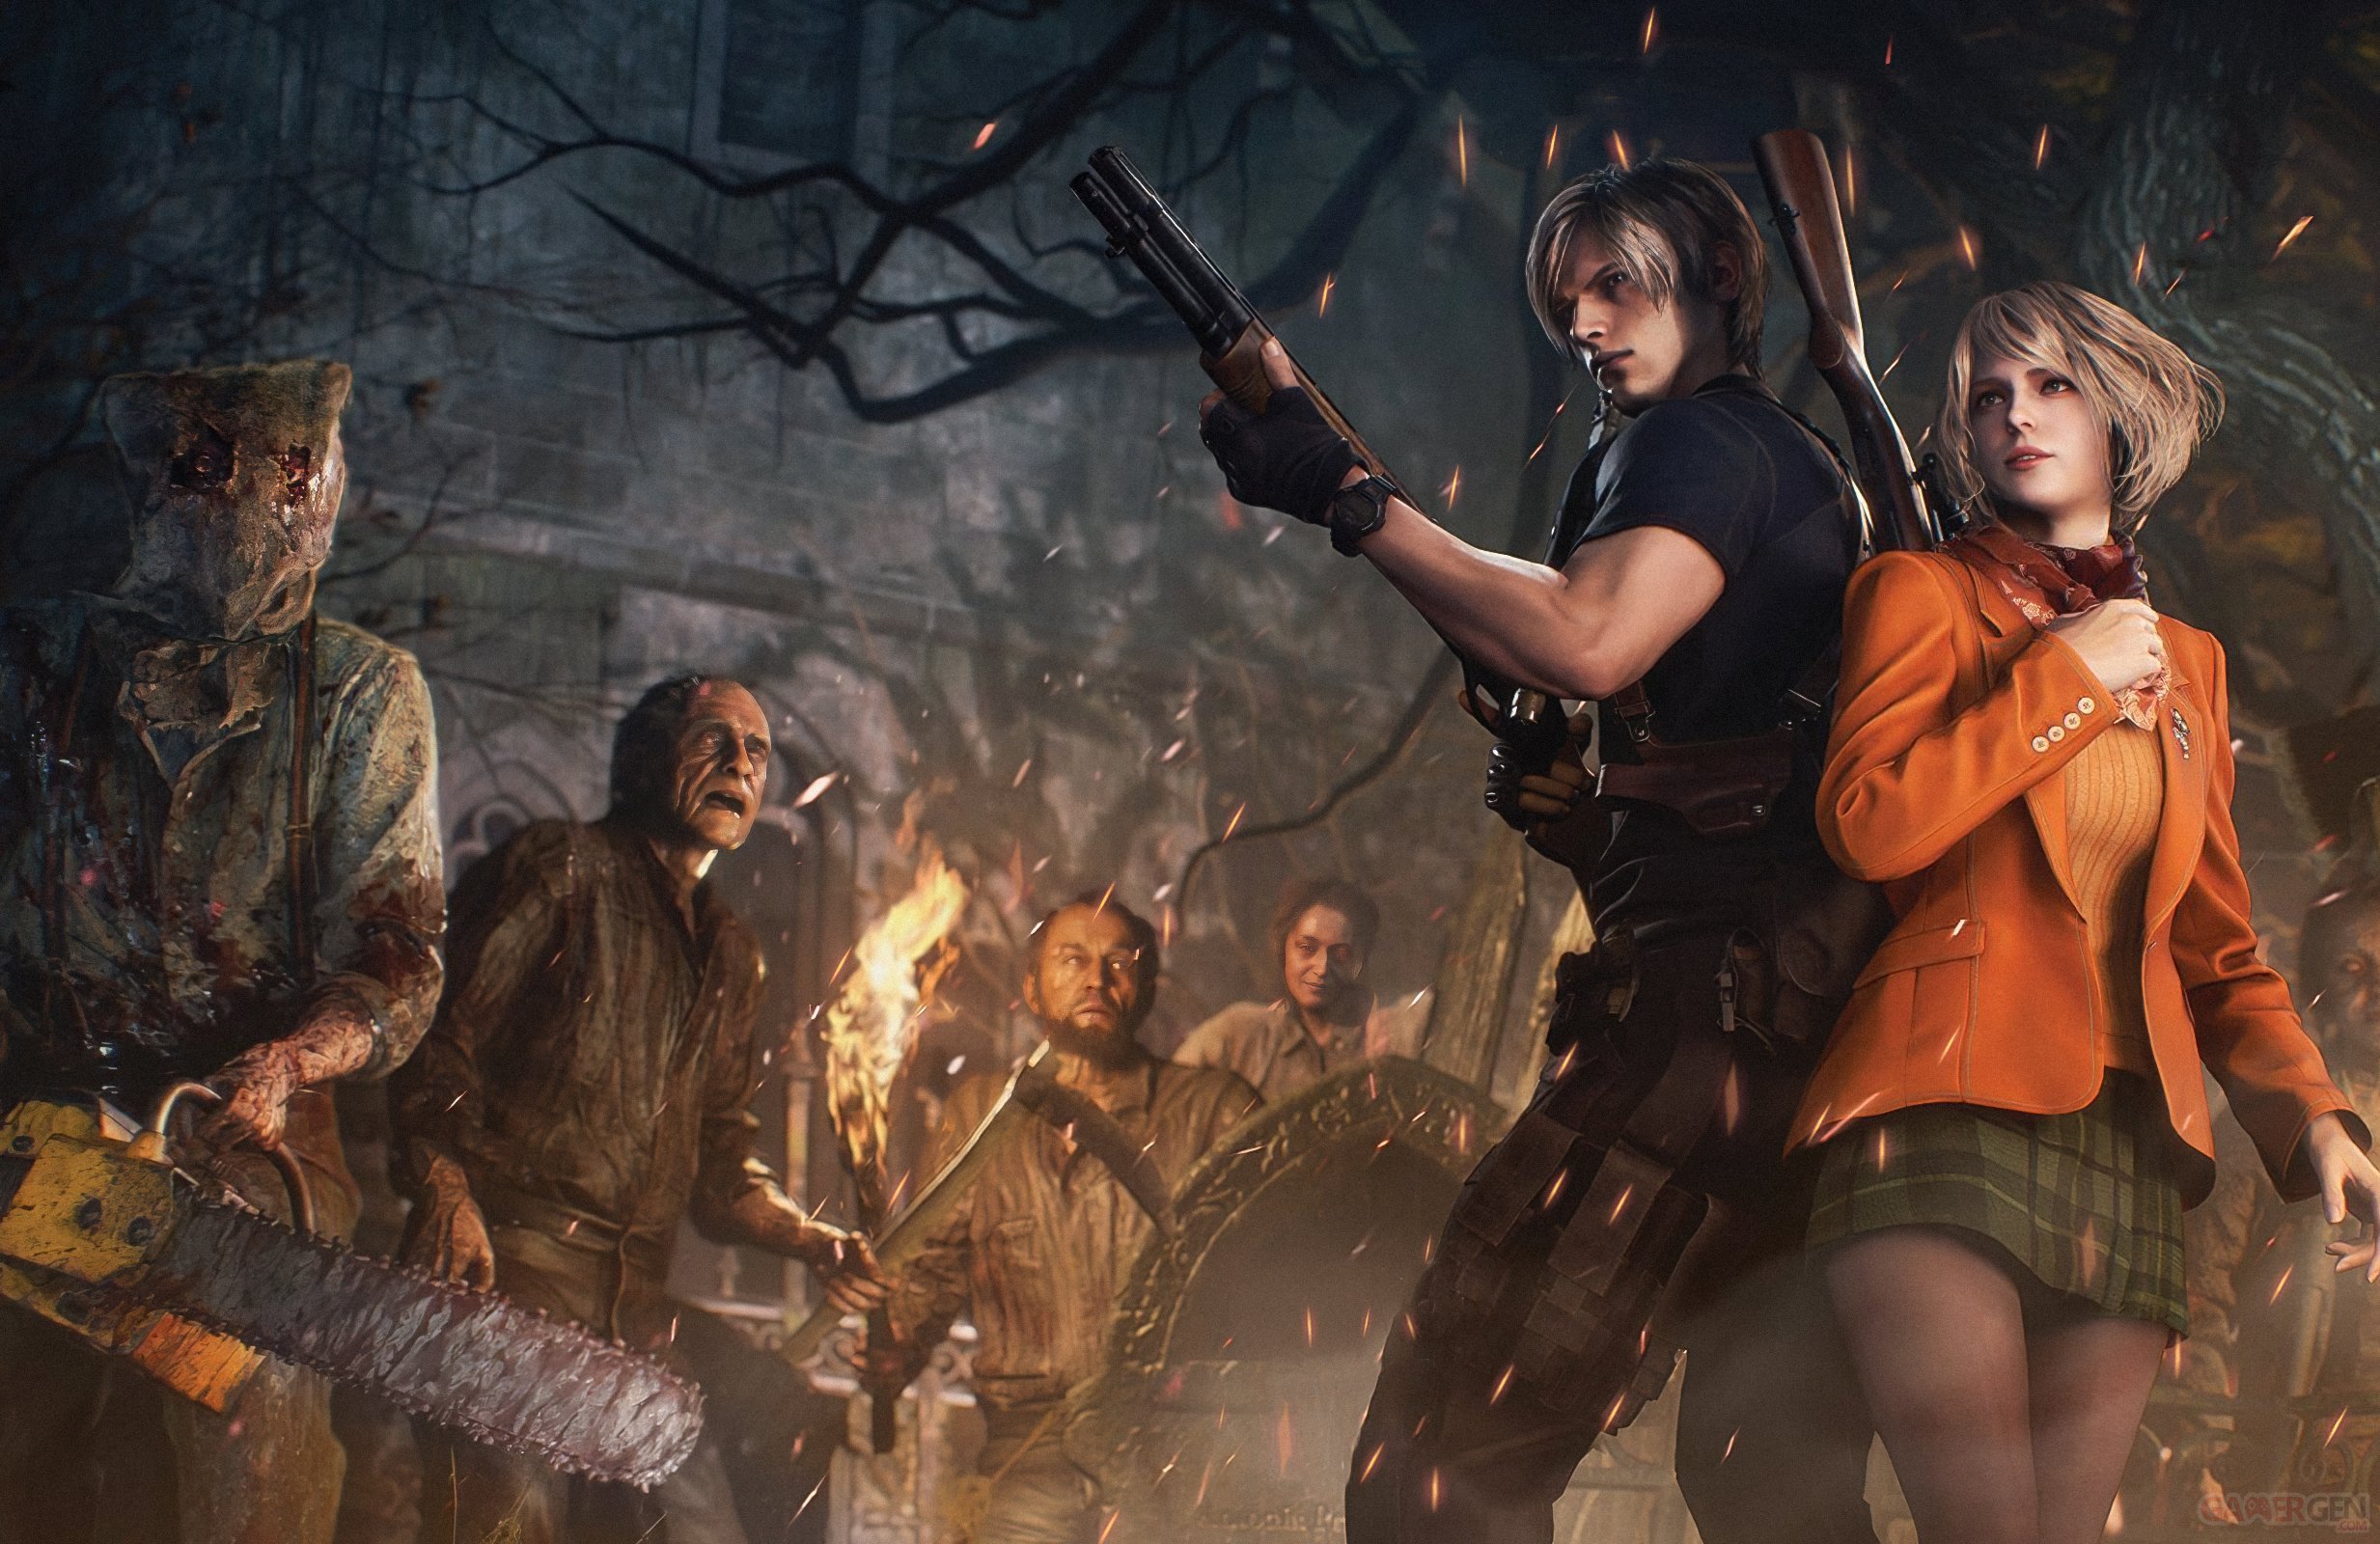 Resident Evil 4 Remake  PS5 MIDIA DIGITAL - Alpine Games - Jogos